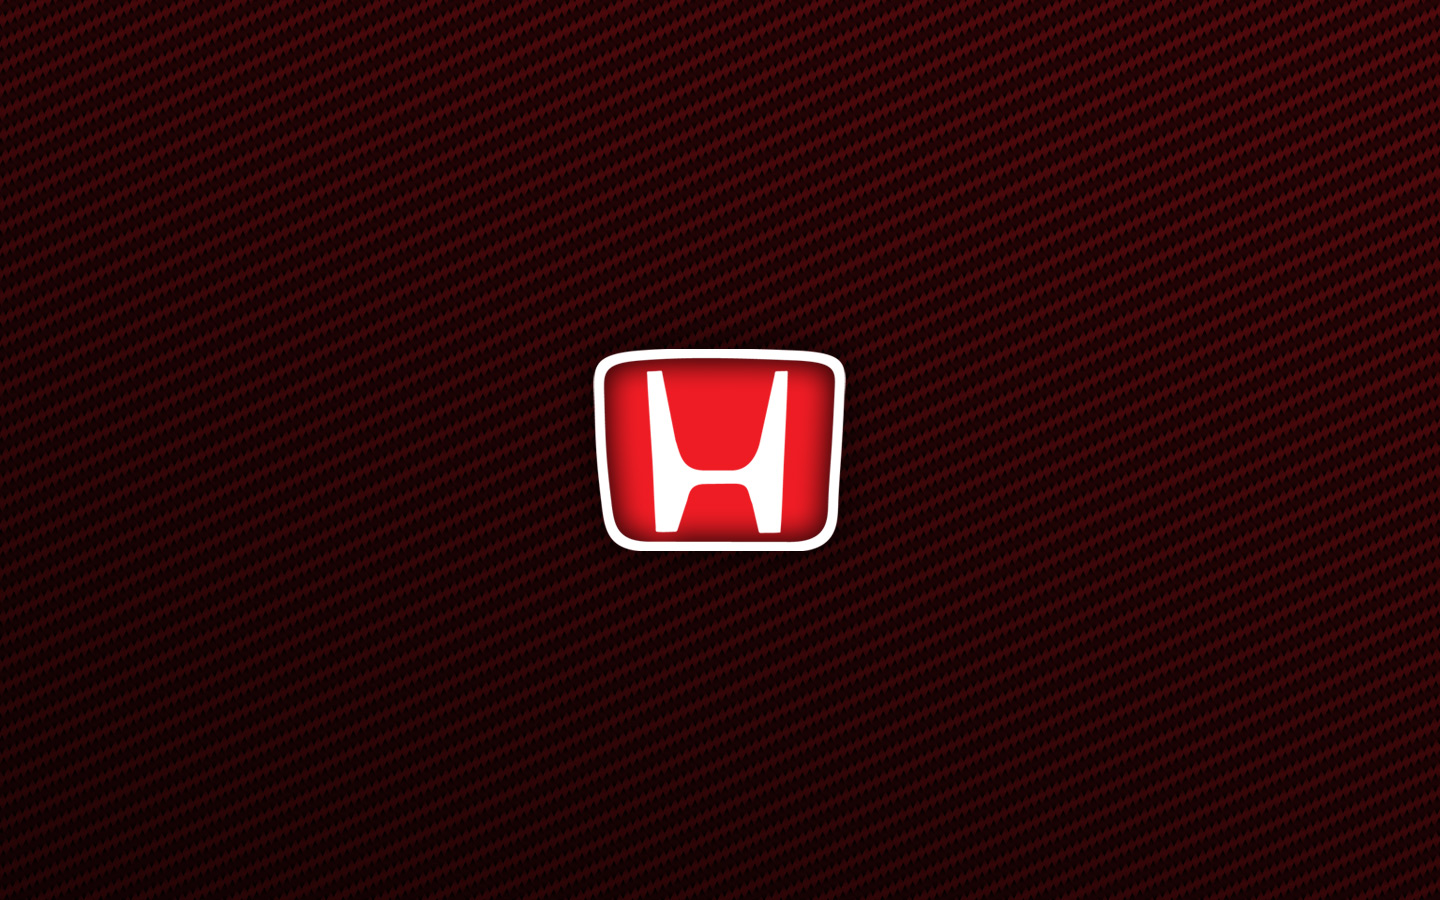 Red Honda Emblem Wallpaper Image Pictures Becuo